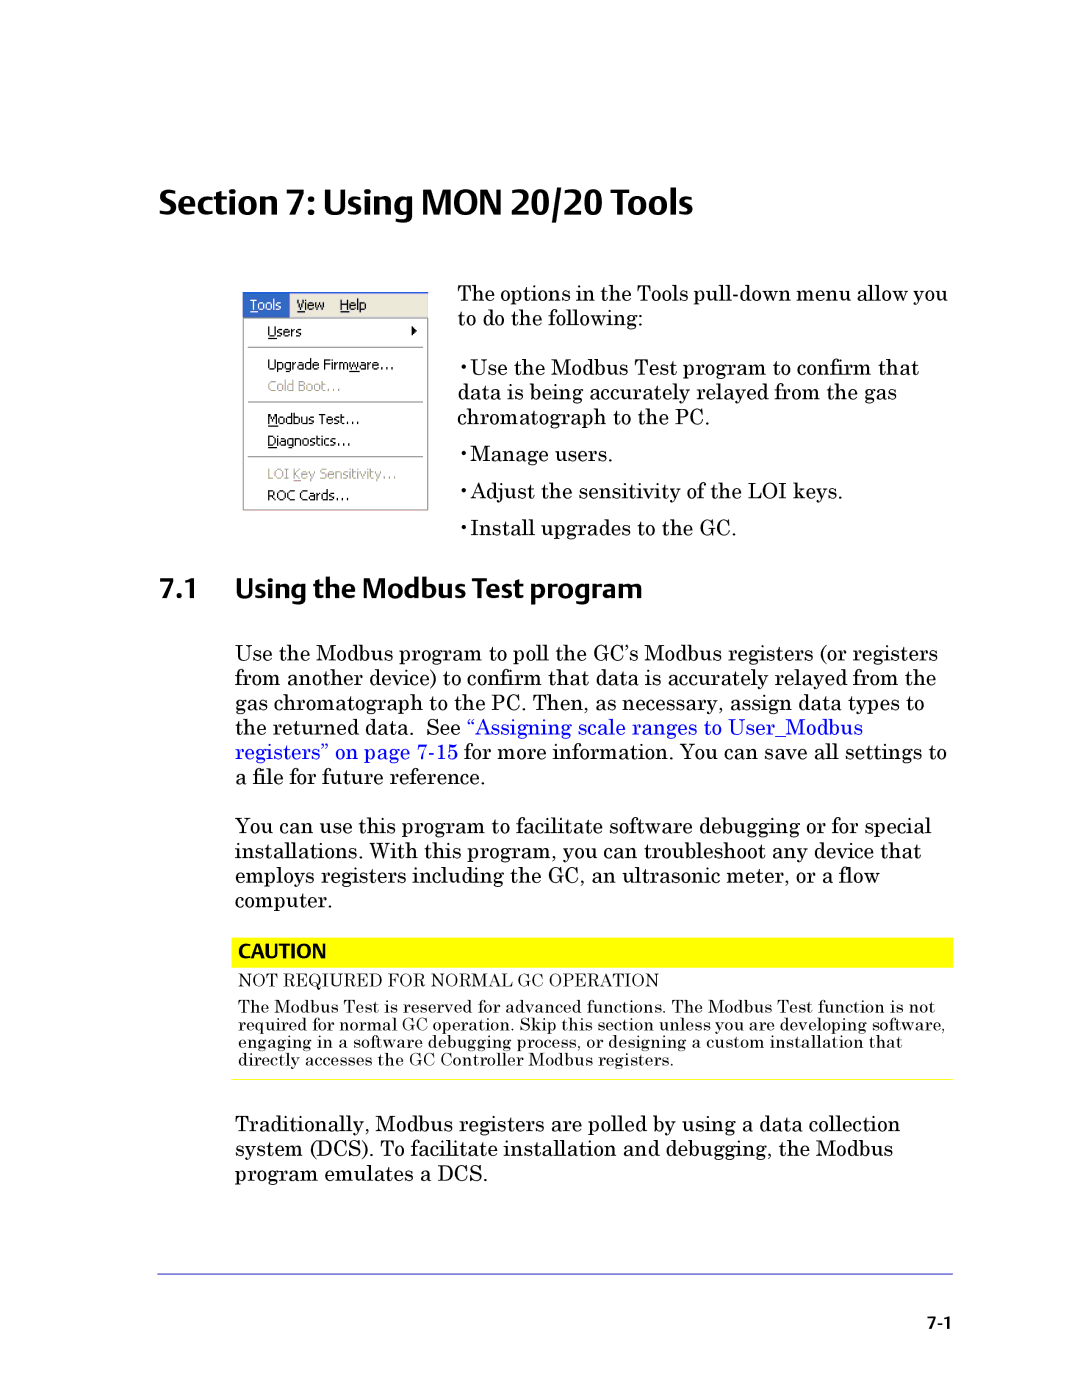 Emerson Process Management 3-9000-745 manual Using MON 20/20 Tools, Using the Modbus Test program 